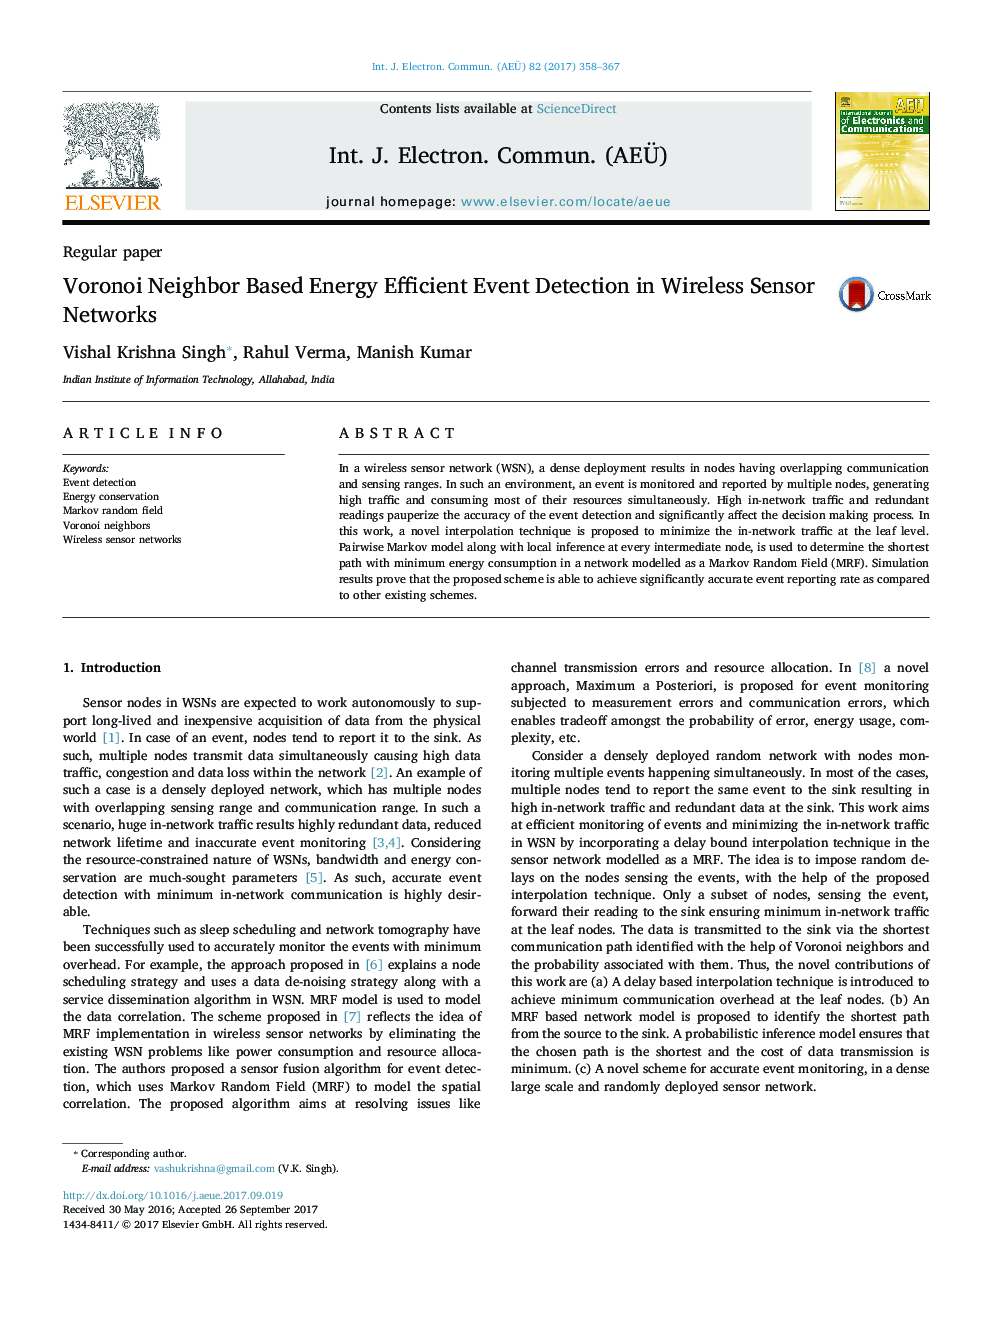 Voronoi Neighbor Based Energy Efficient Event Detection in Wireless Sensor Networks